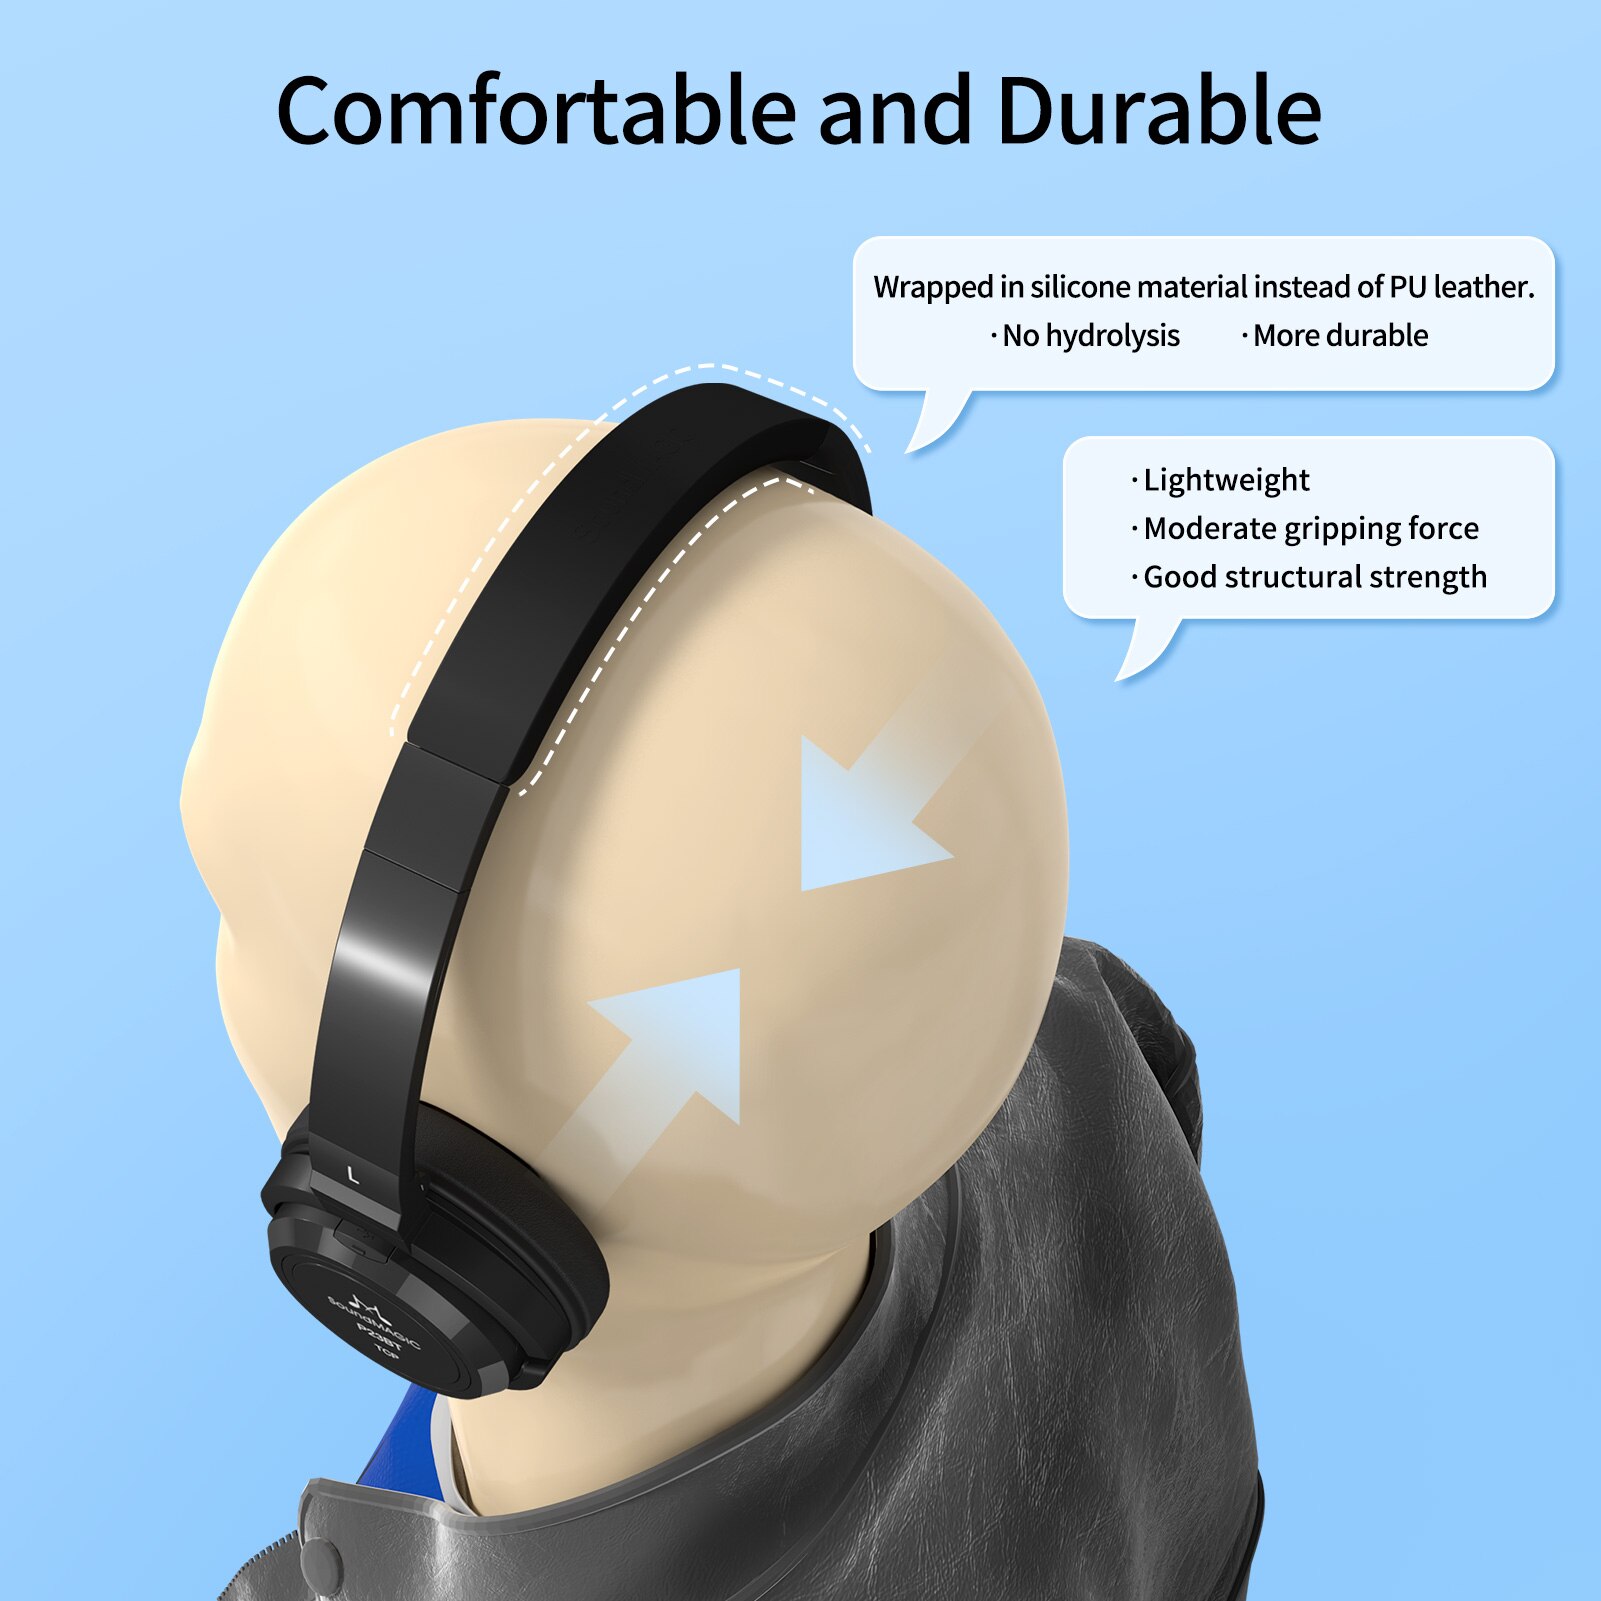 SoundMAGIC On Ear Bluetooth Headphones with Noise Cancellation